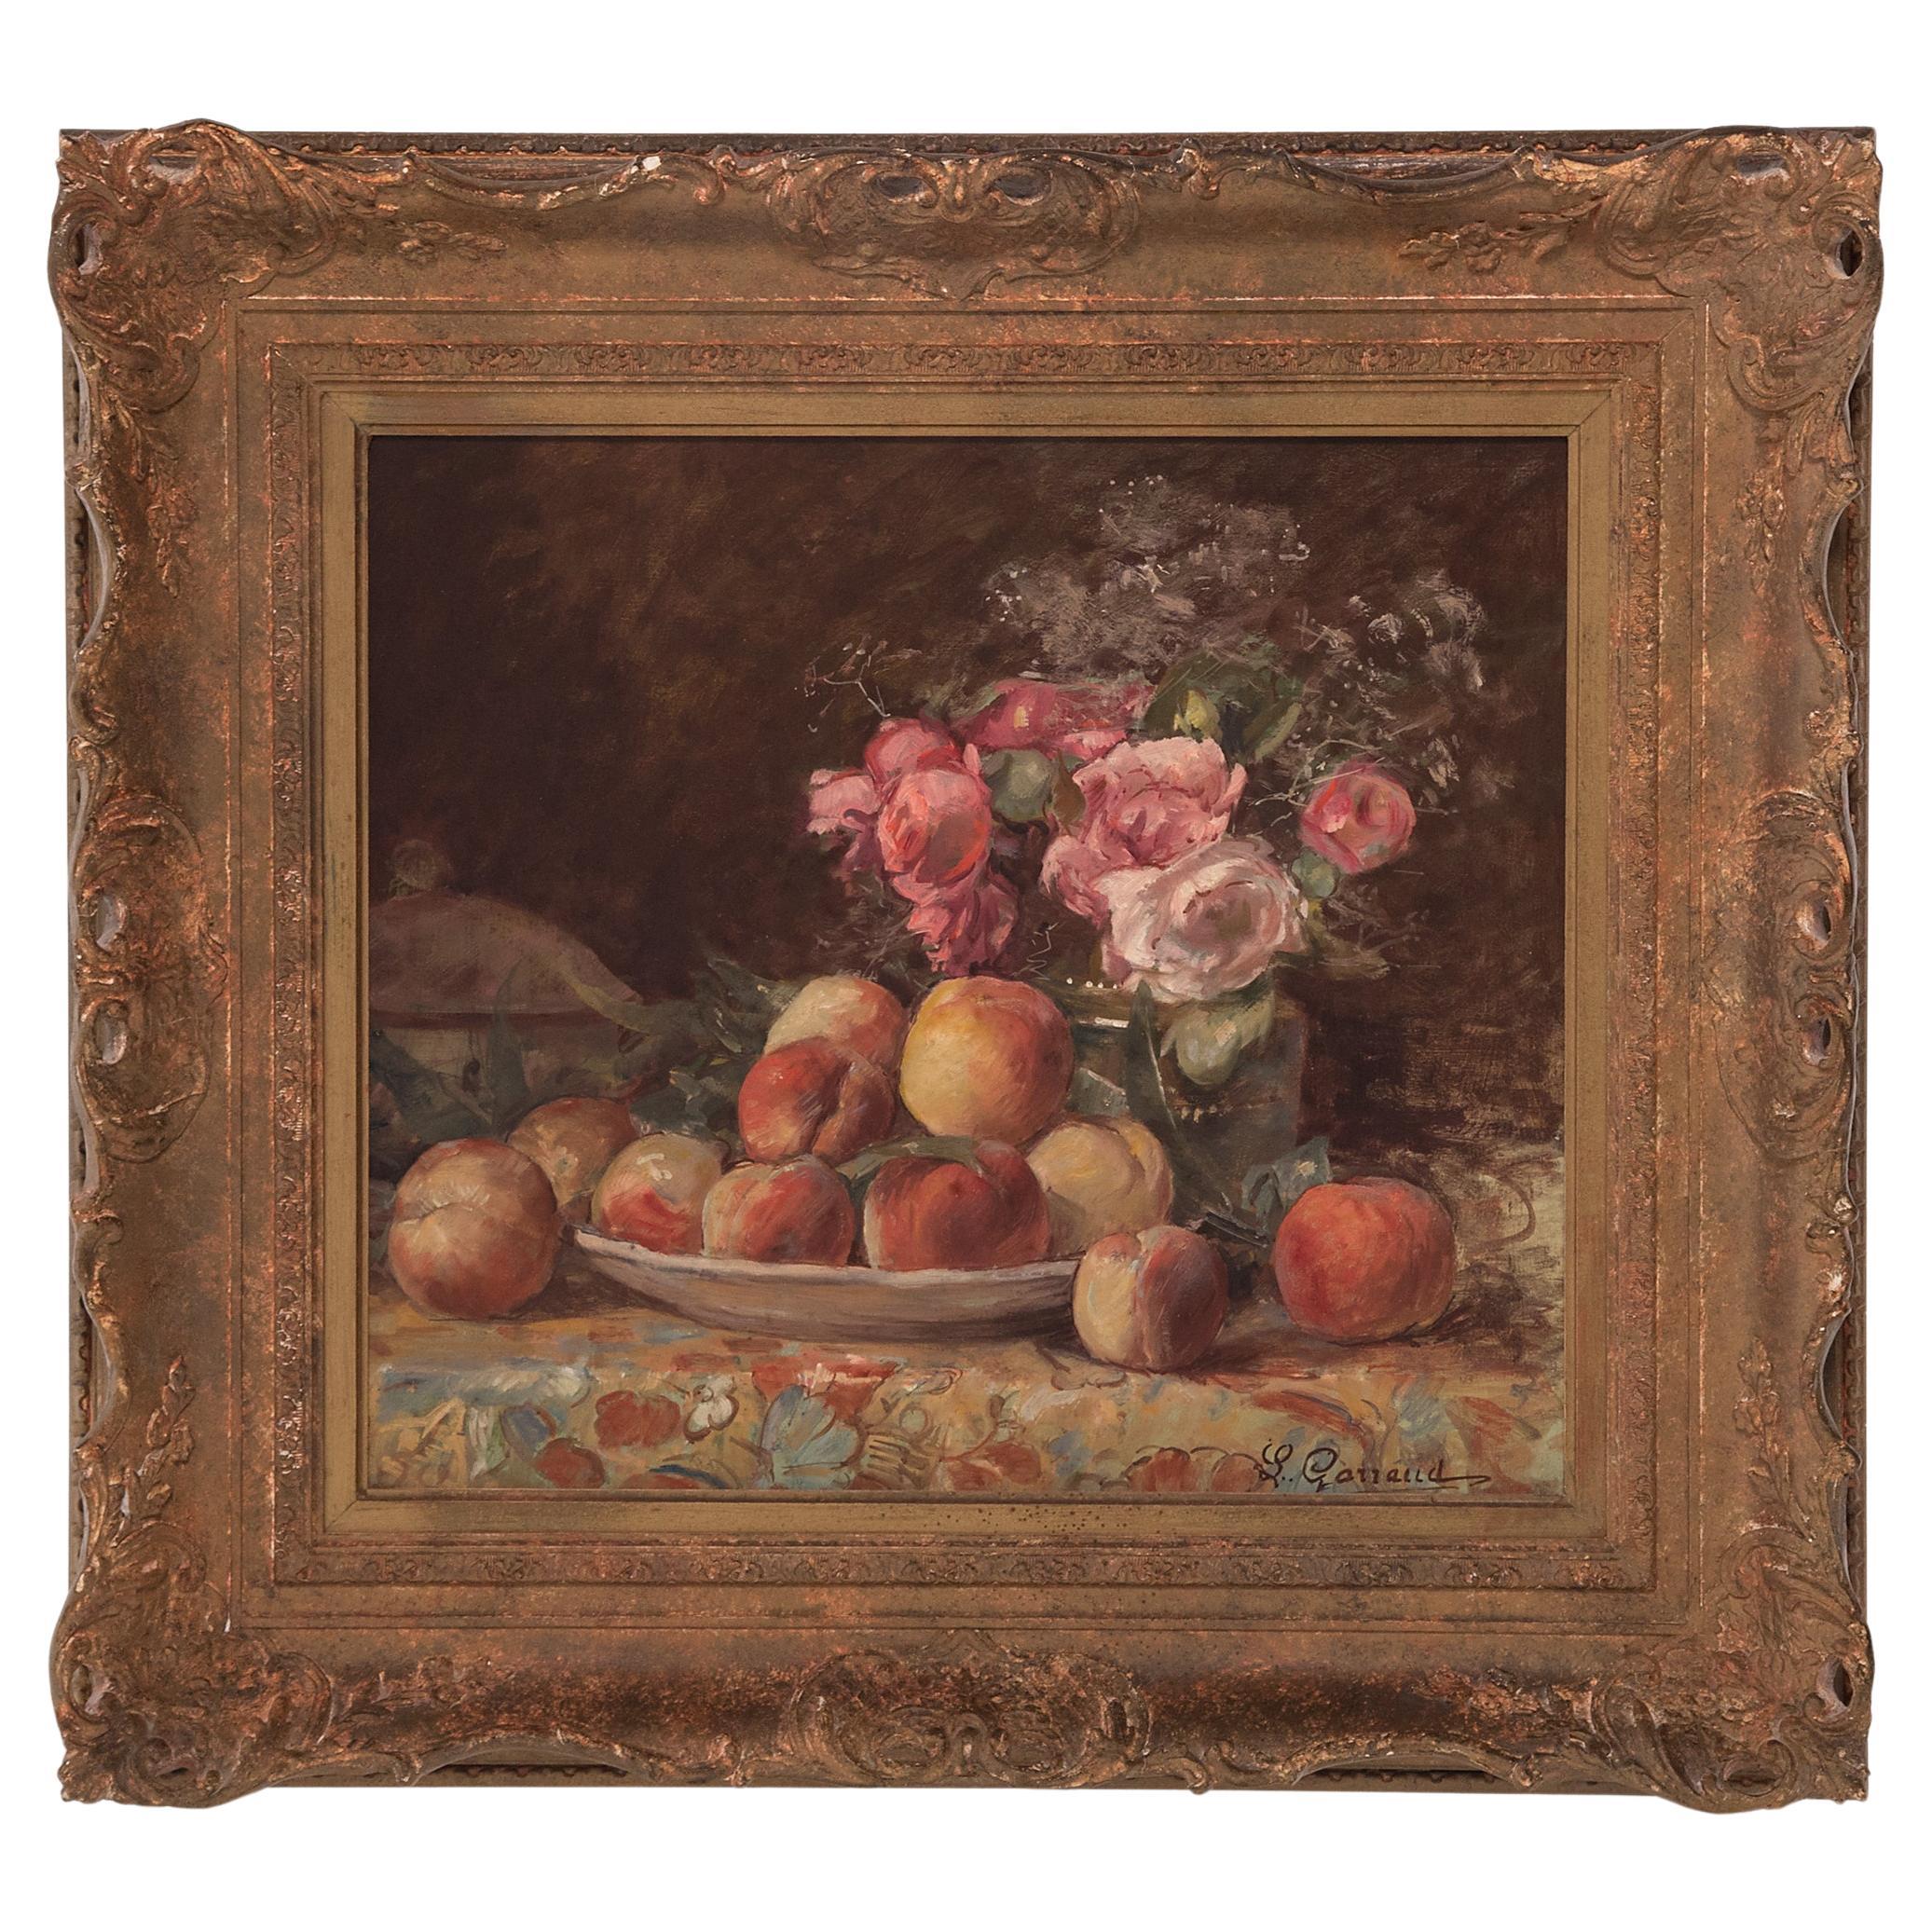 "Still Life of Fruit and Flowers" by Léon Garraud